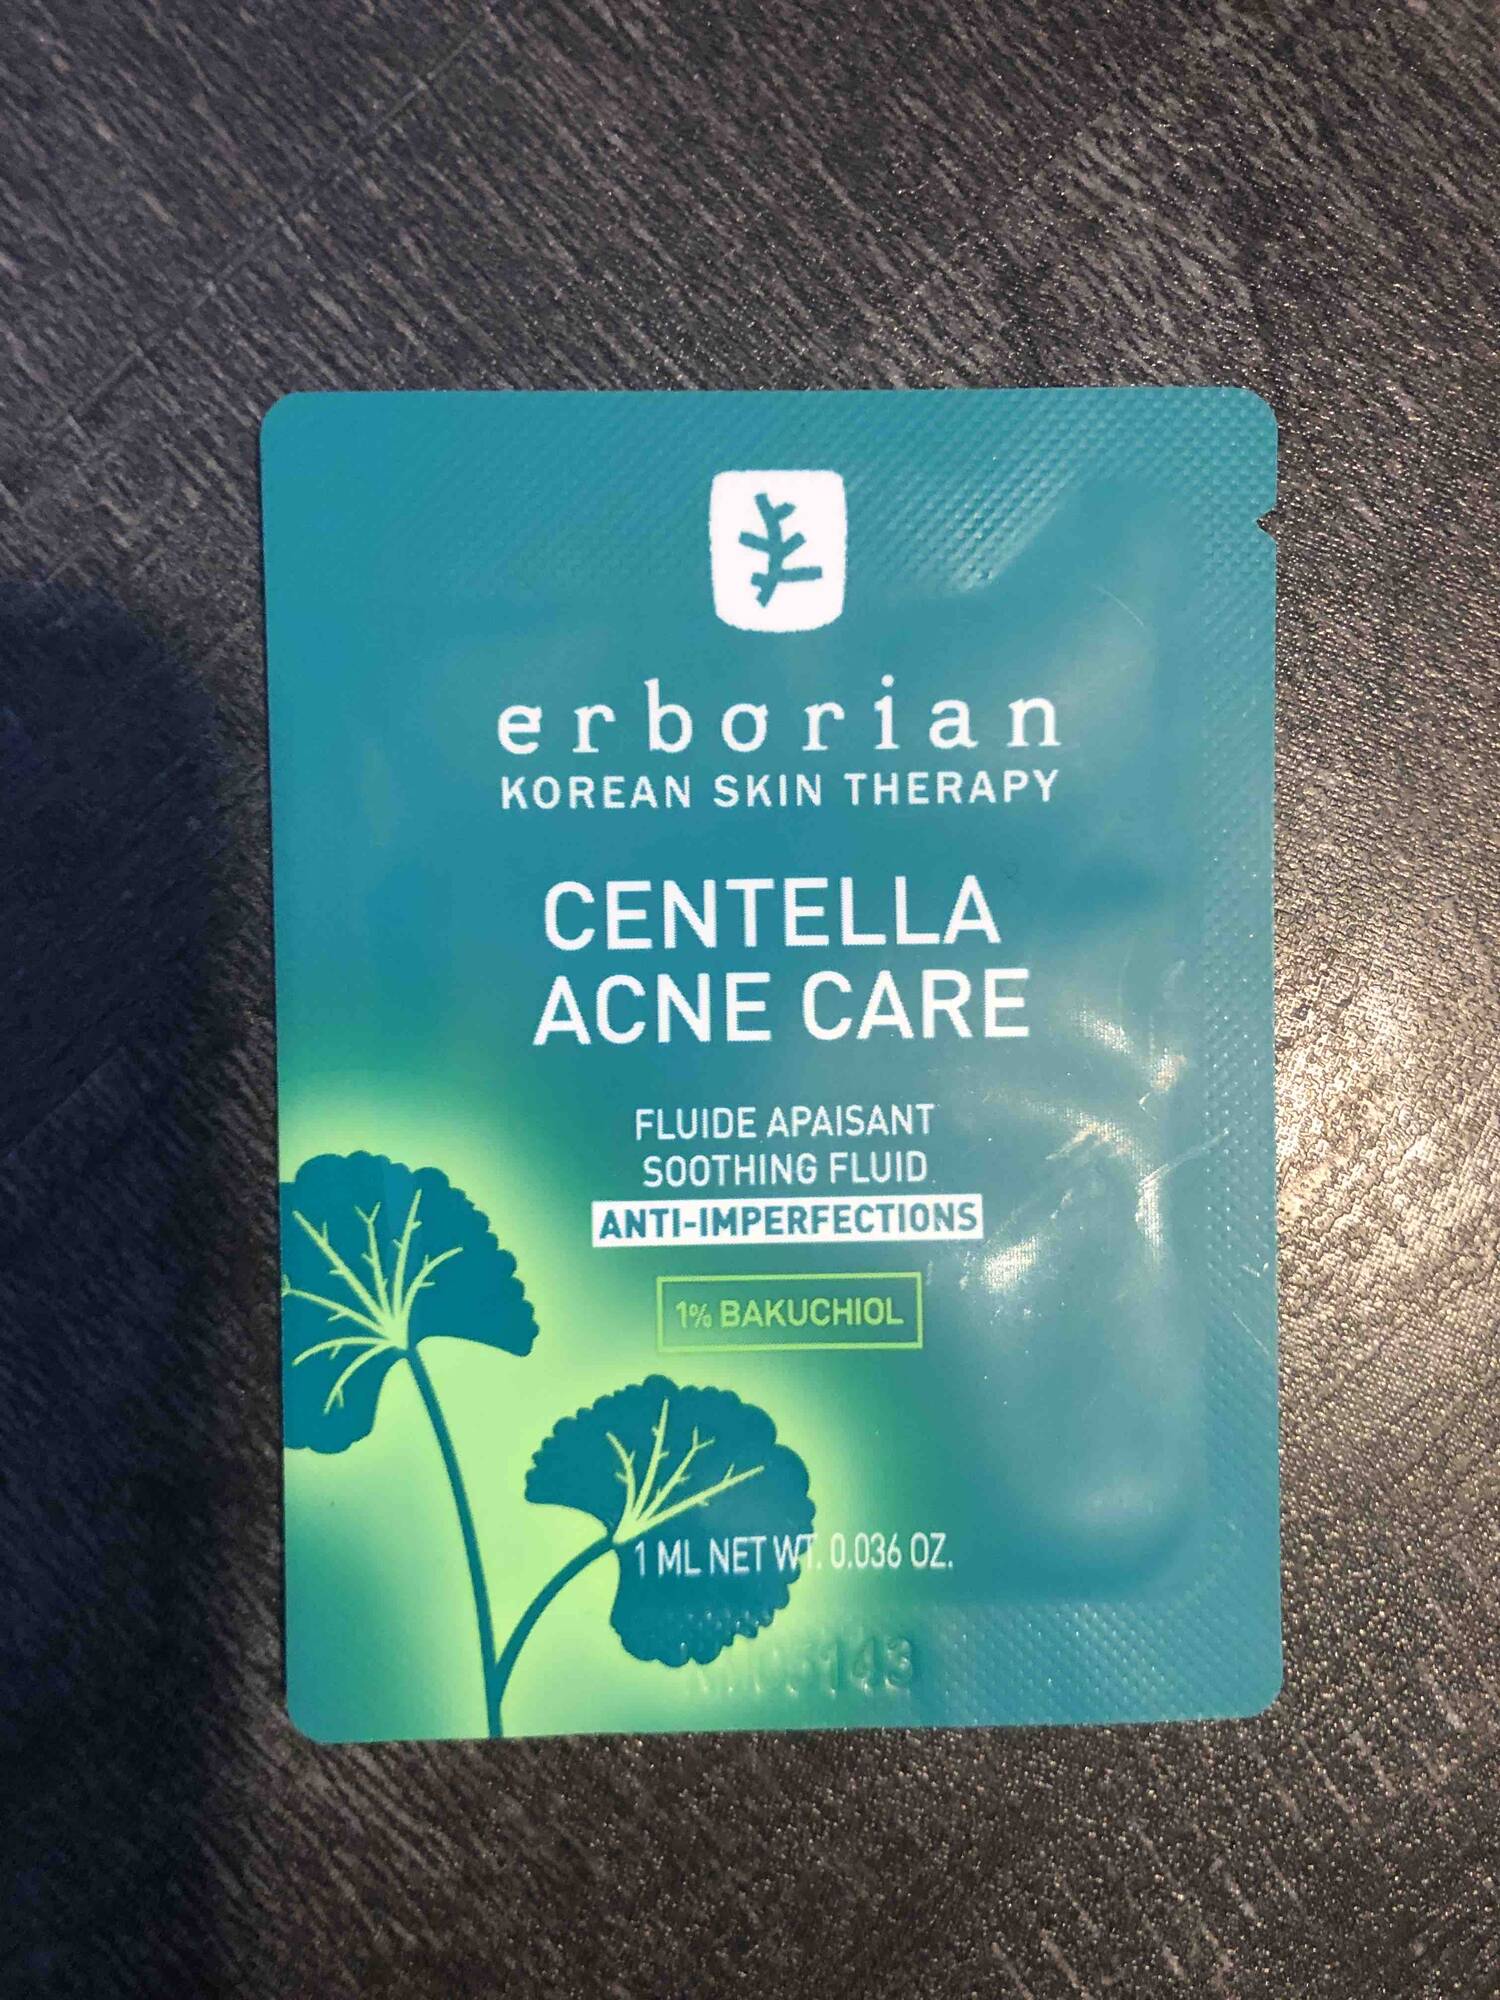 ERBORIAN - Centella acne care - Anti-imperfections